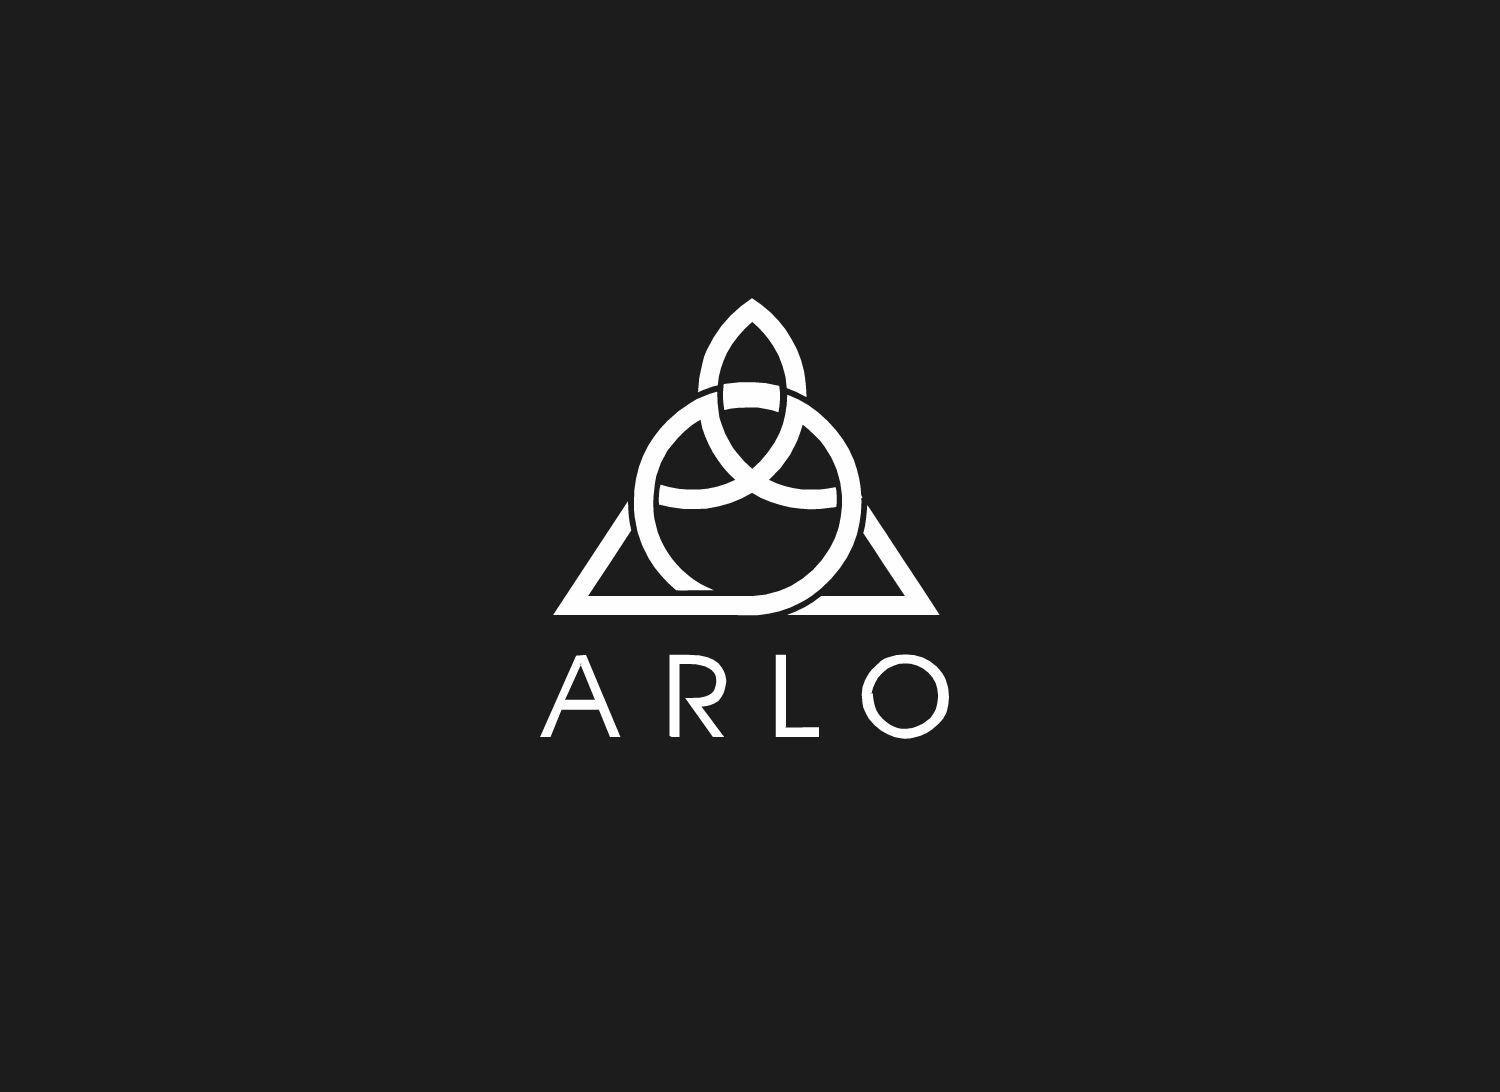 Arlo Logo - Serious, Masculine, Fitness Logo Design for ARLO